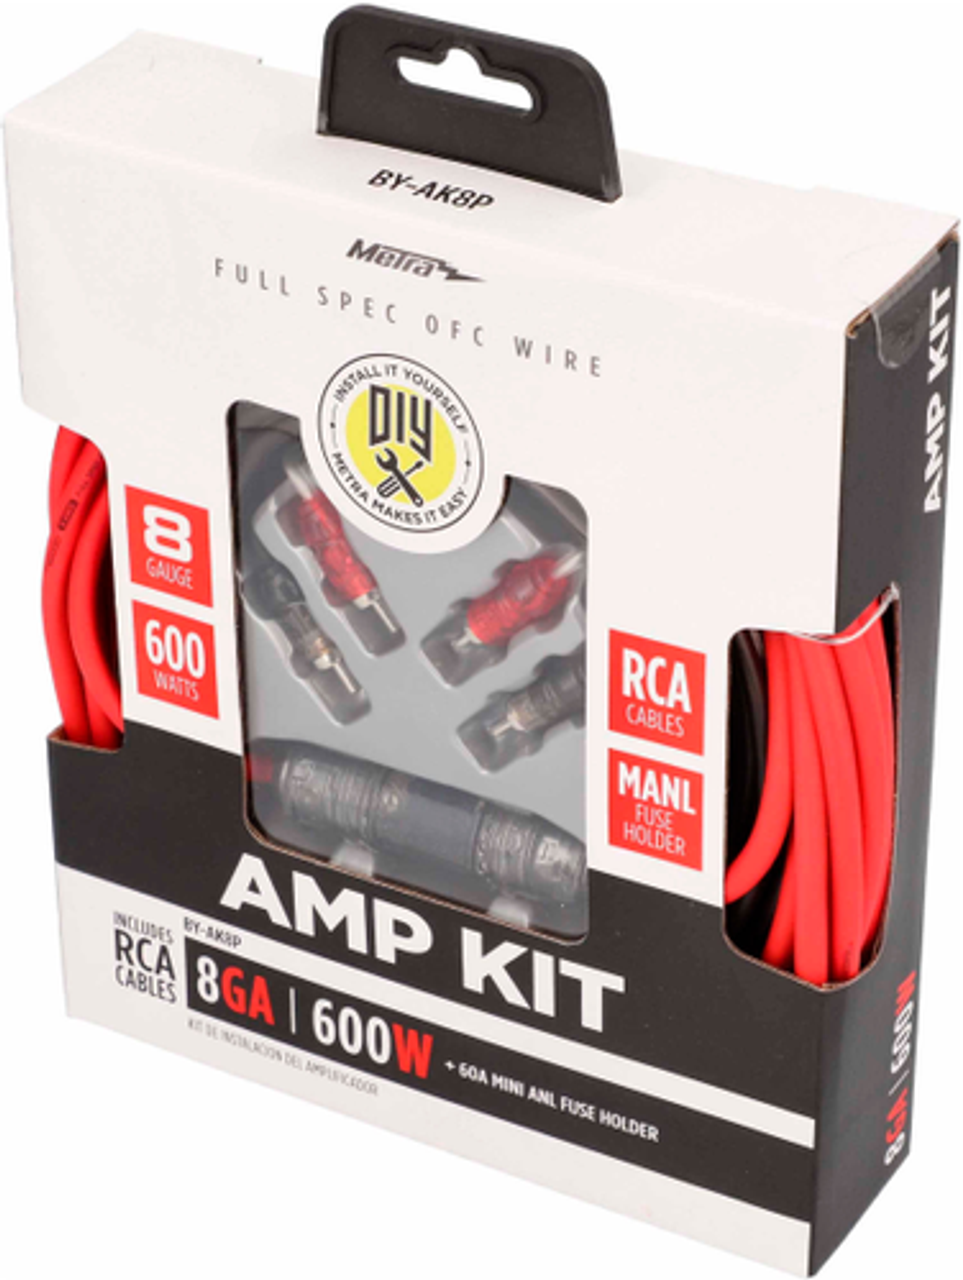 Metra - 8 AWG Complete Amp Kit - Multi